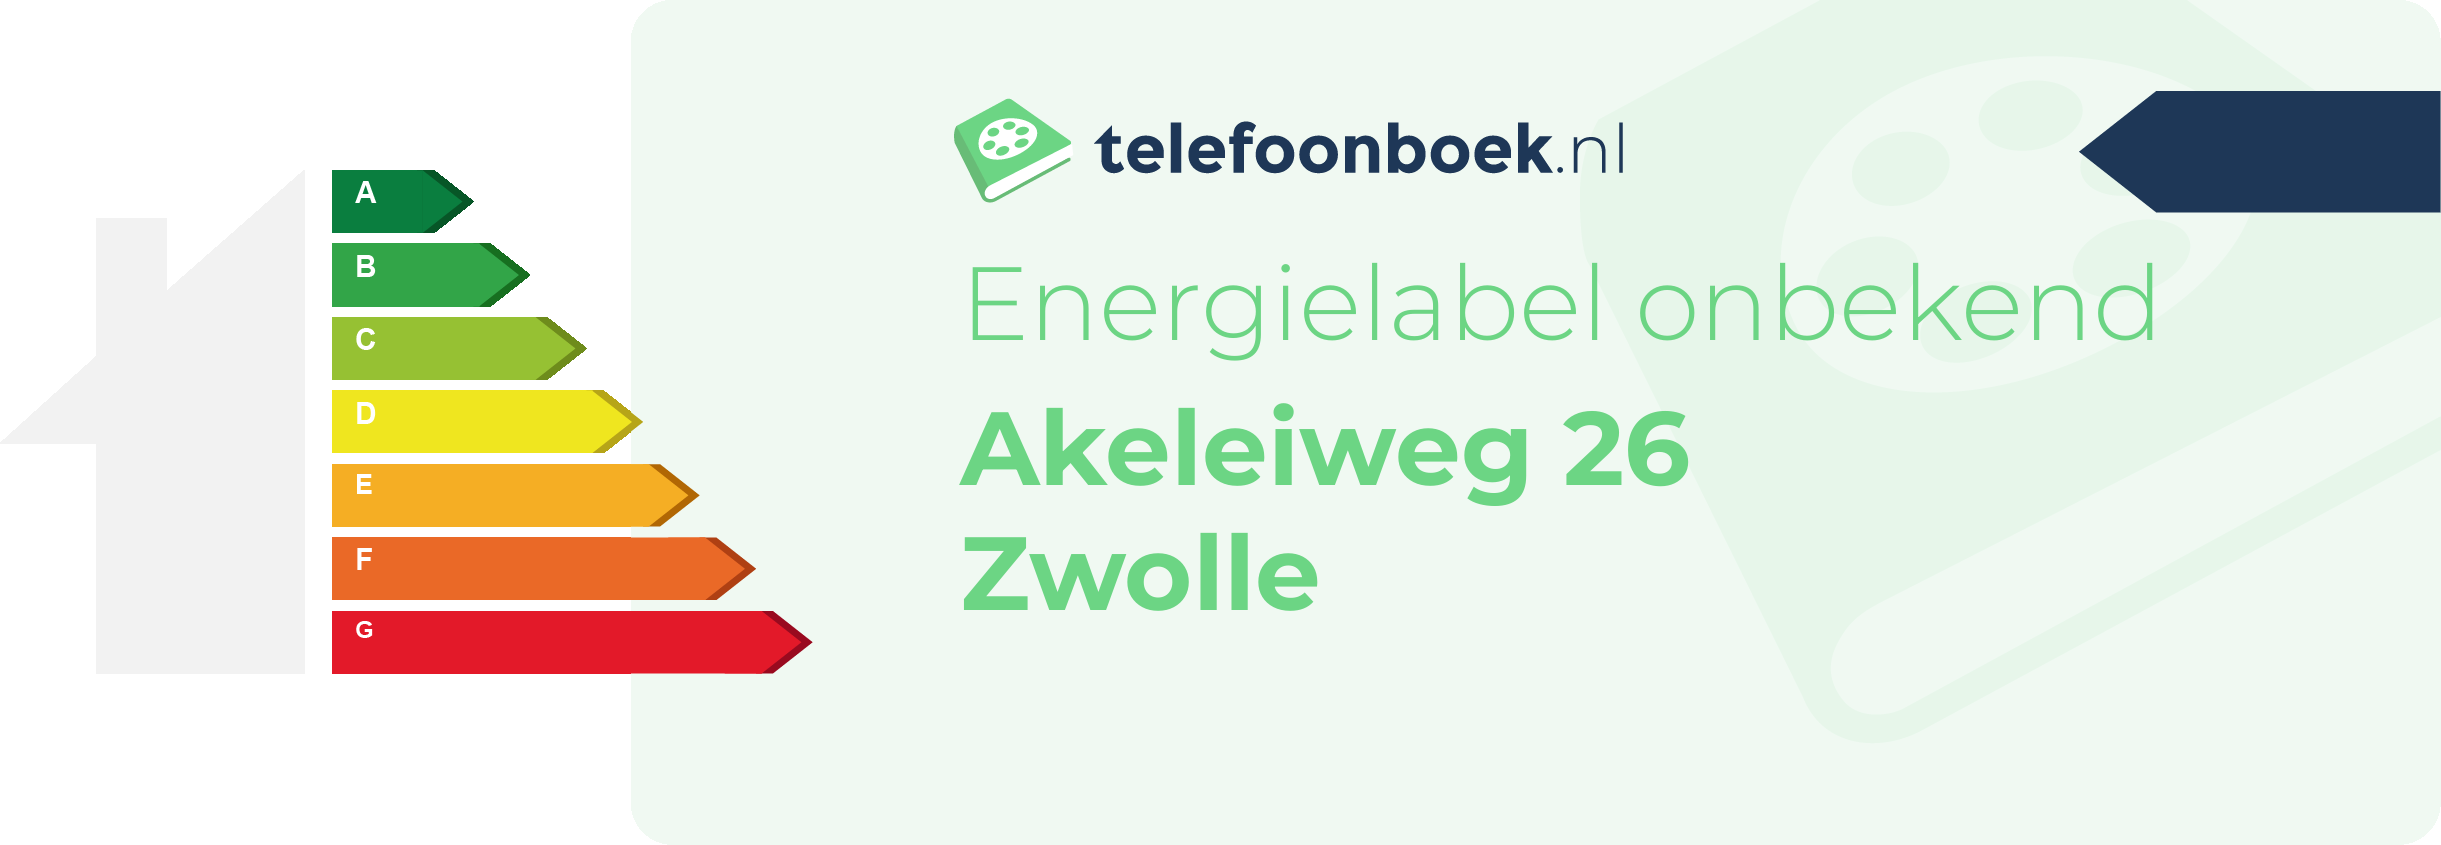 Energielabel Akeleiweg 26 Zwolle